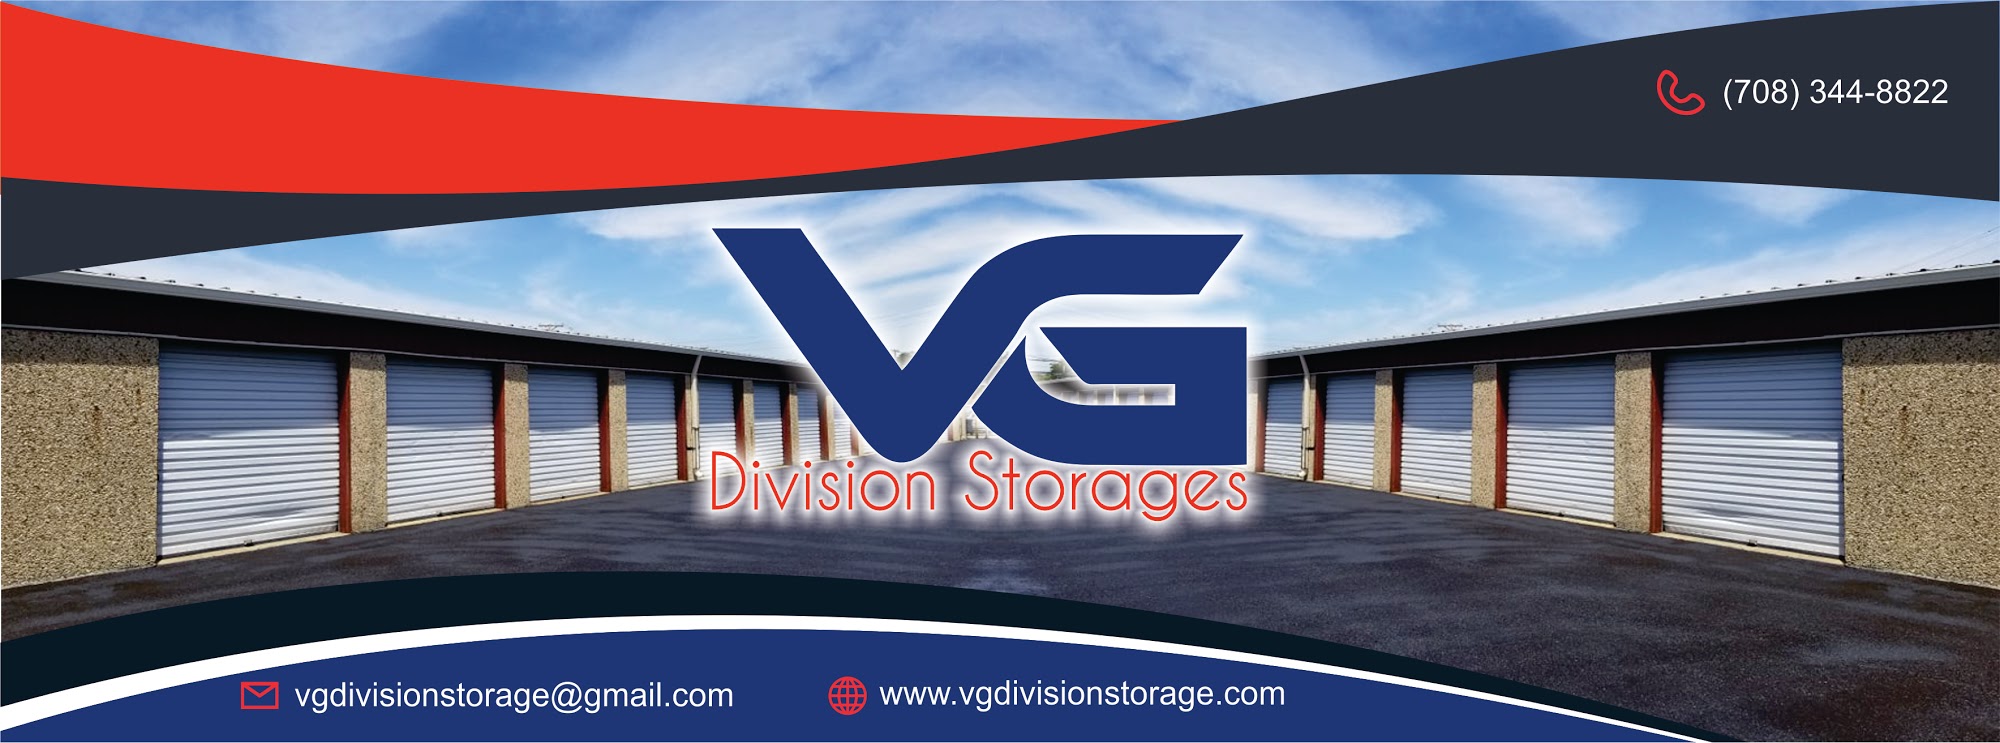 VG Division Storage